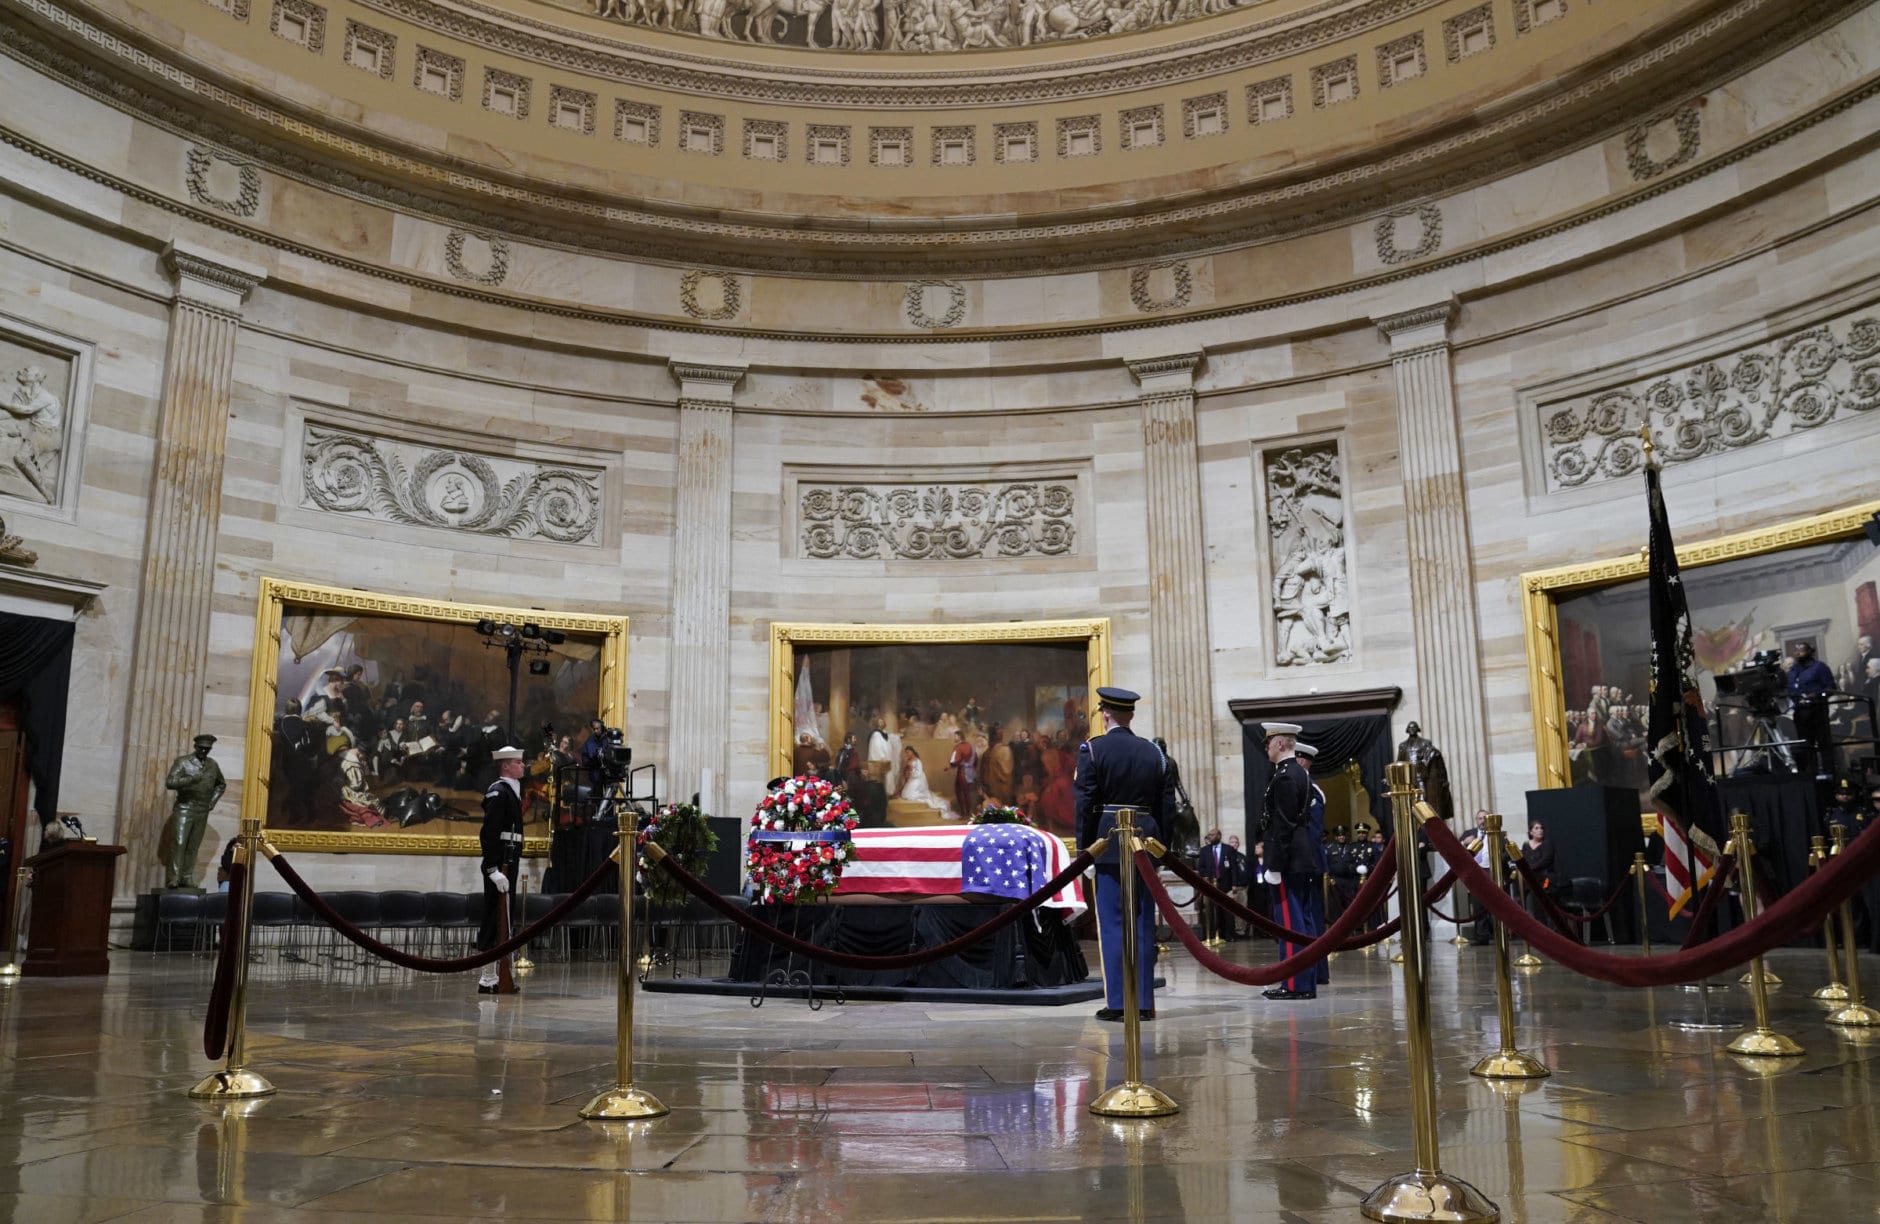 The flag-draped casket of former President George H.W. Bush lying in state at the U.S. Capitol Rotunda, Monday, Dec. 3, 2018, in Washington. (AP Photo/Pablo Martinez Monsivais)